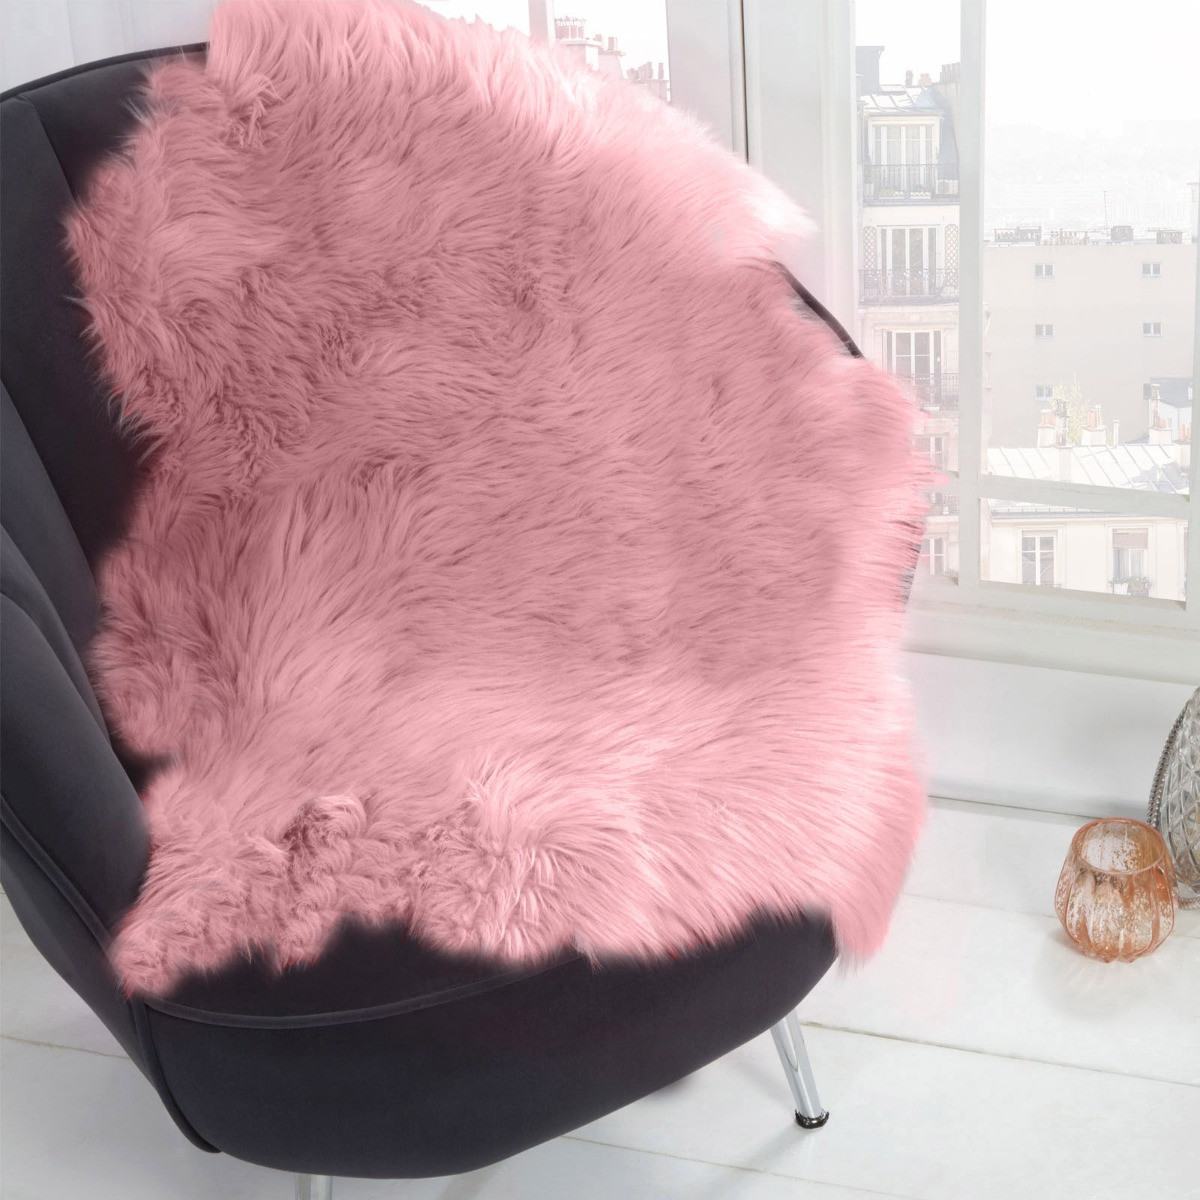 Sienna Faux Fur Sheepskin Rug, Blush Pink - 60 x 90cm>